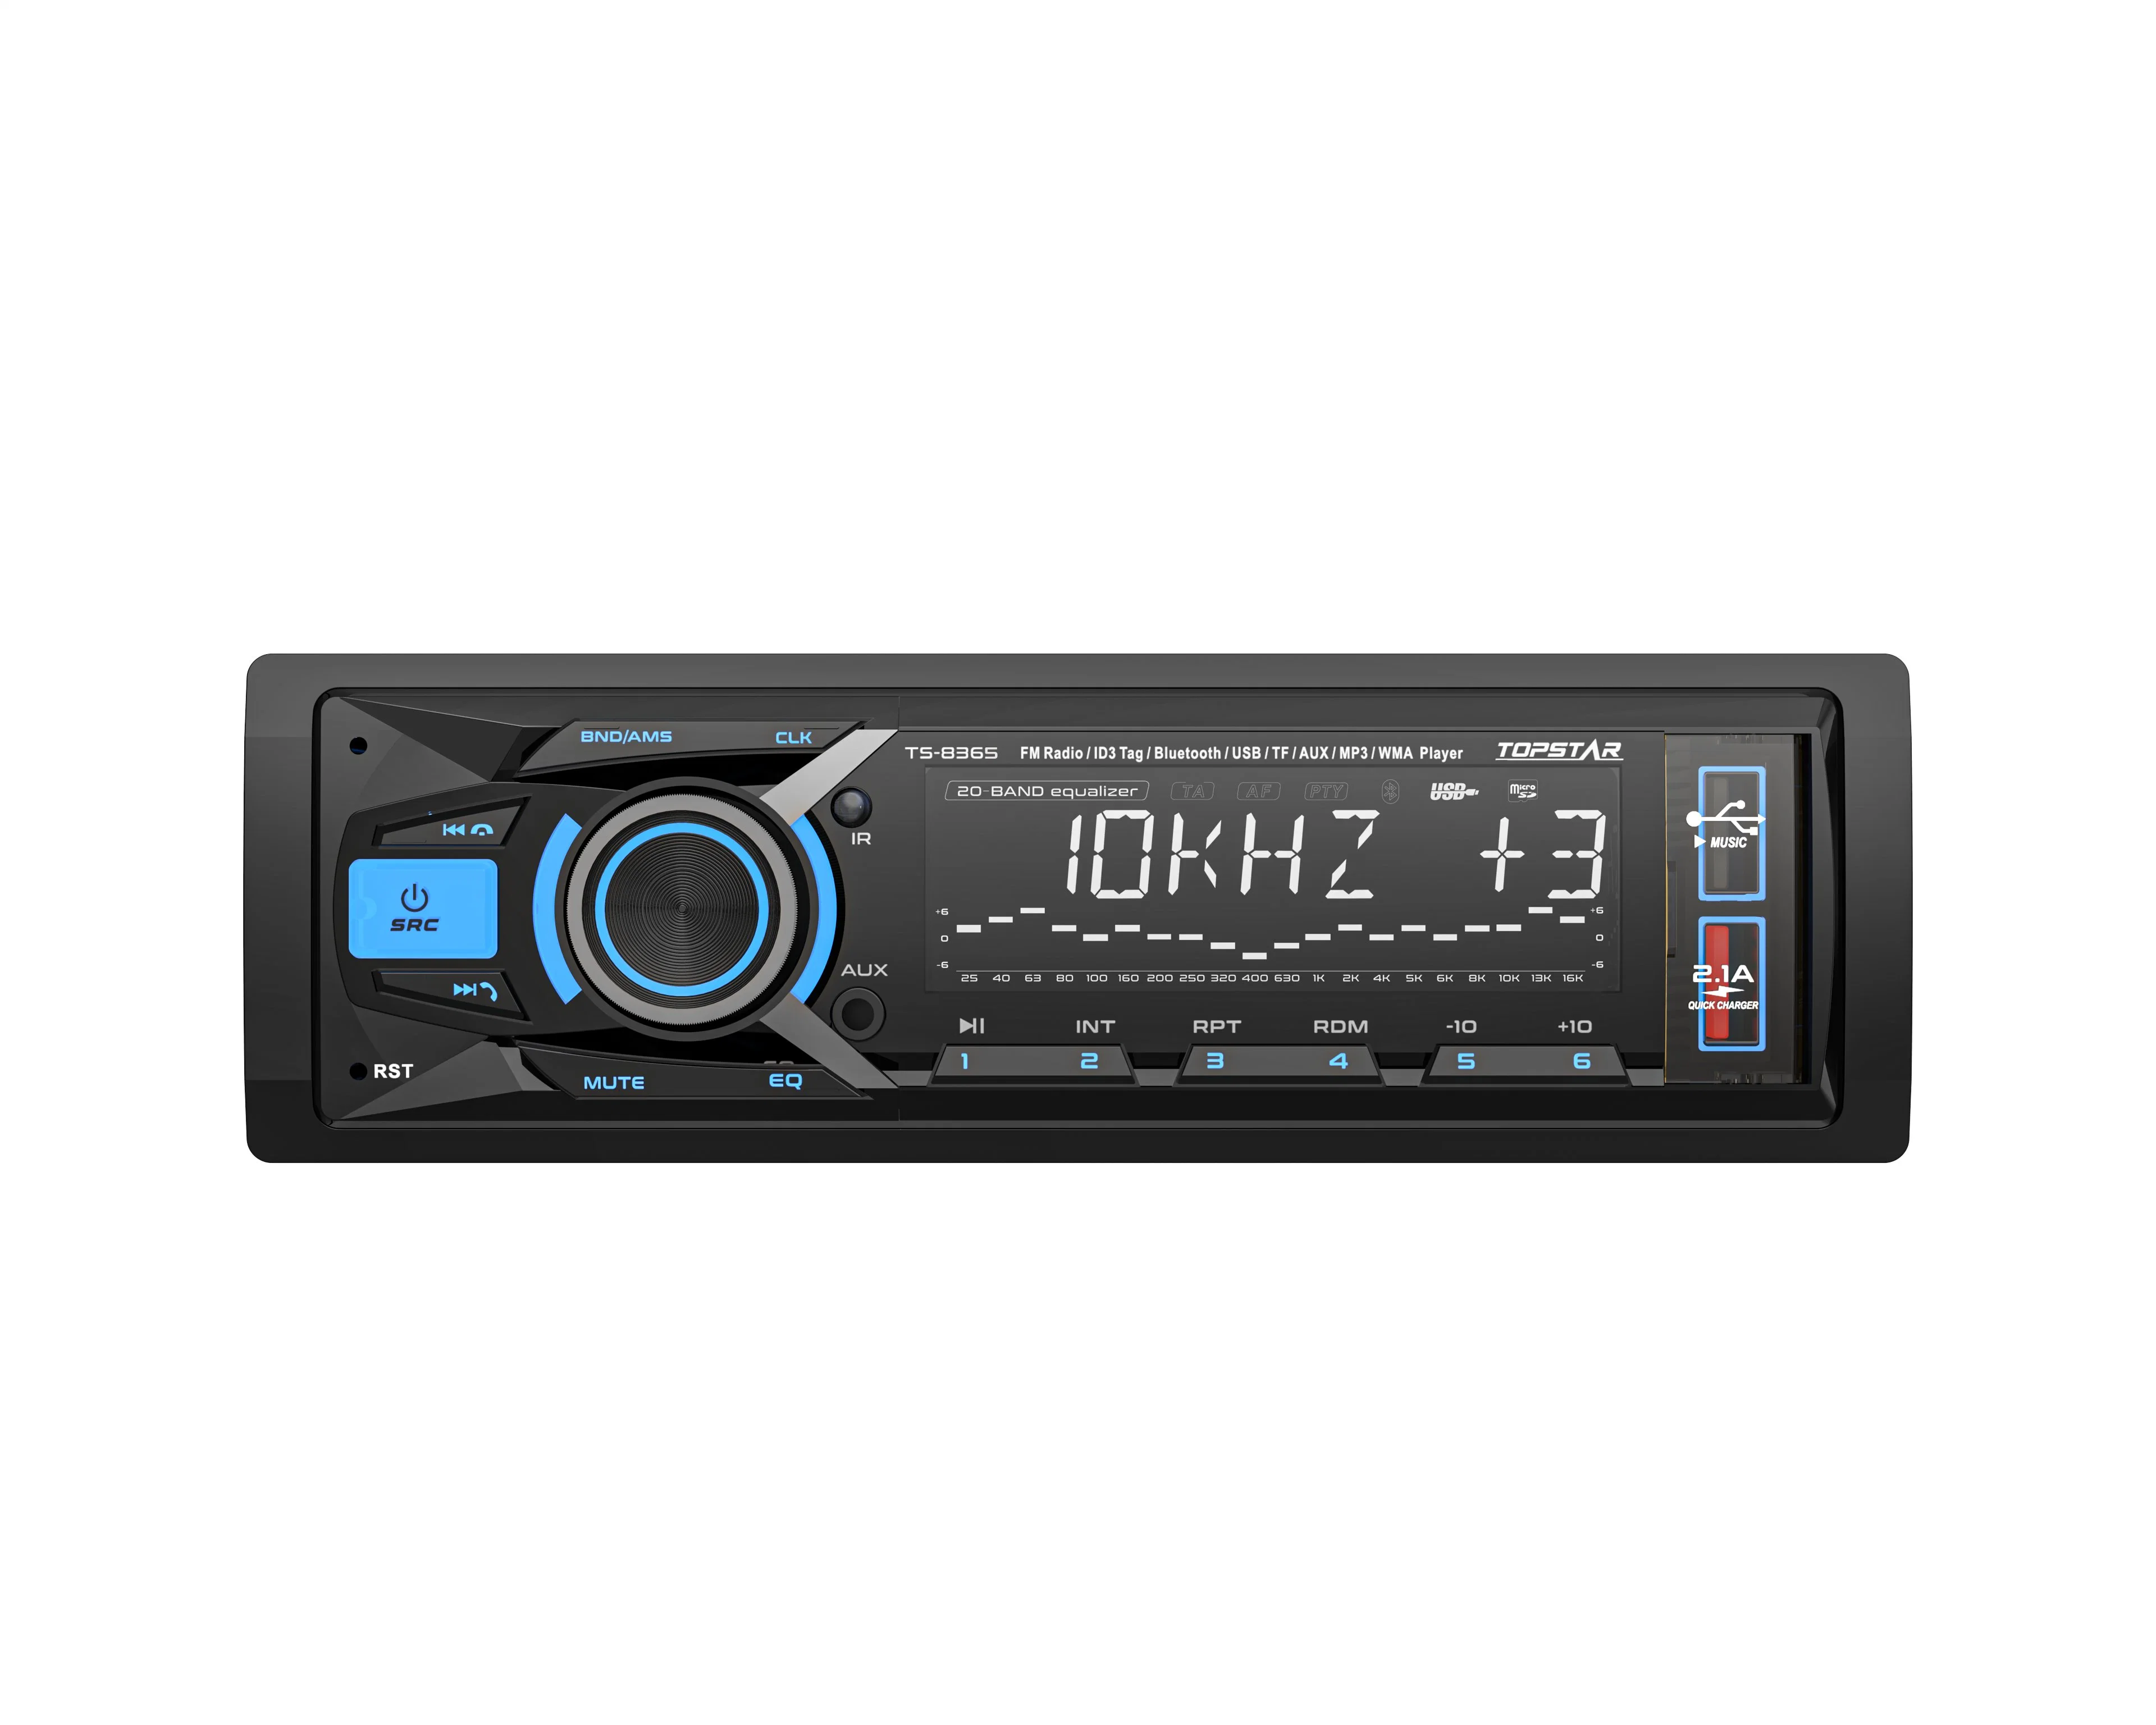 Pantalla LCD del reproductor de audio estéreo MP3 para coche